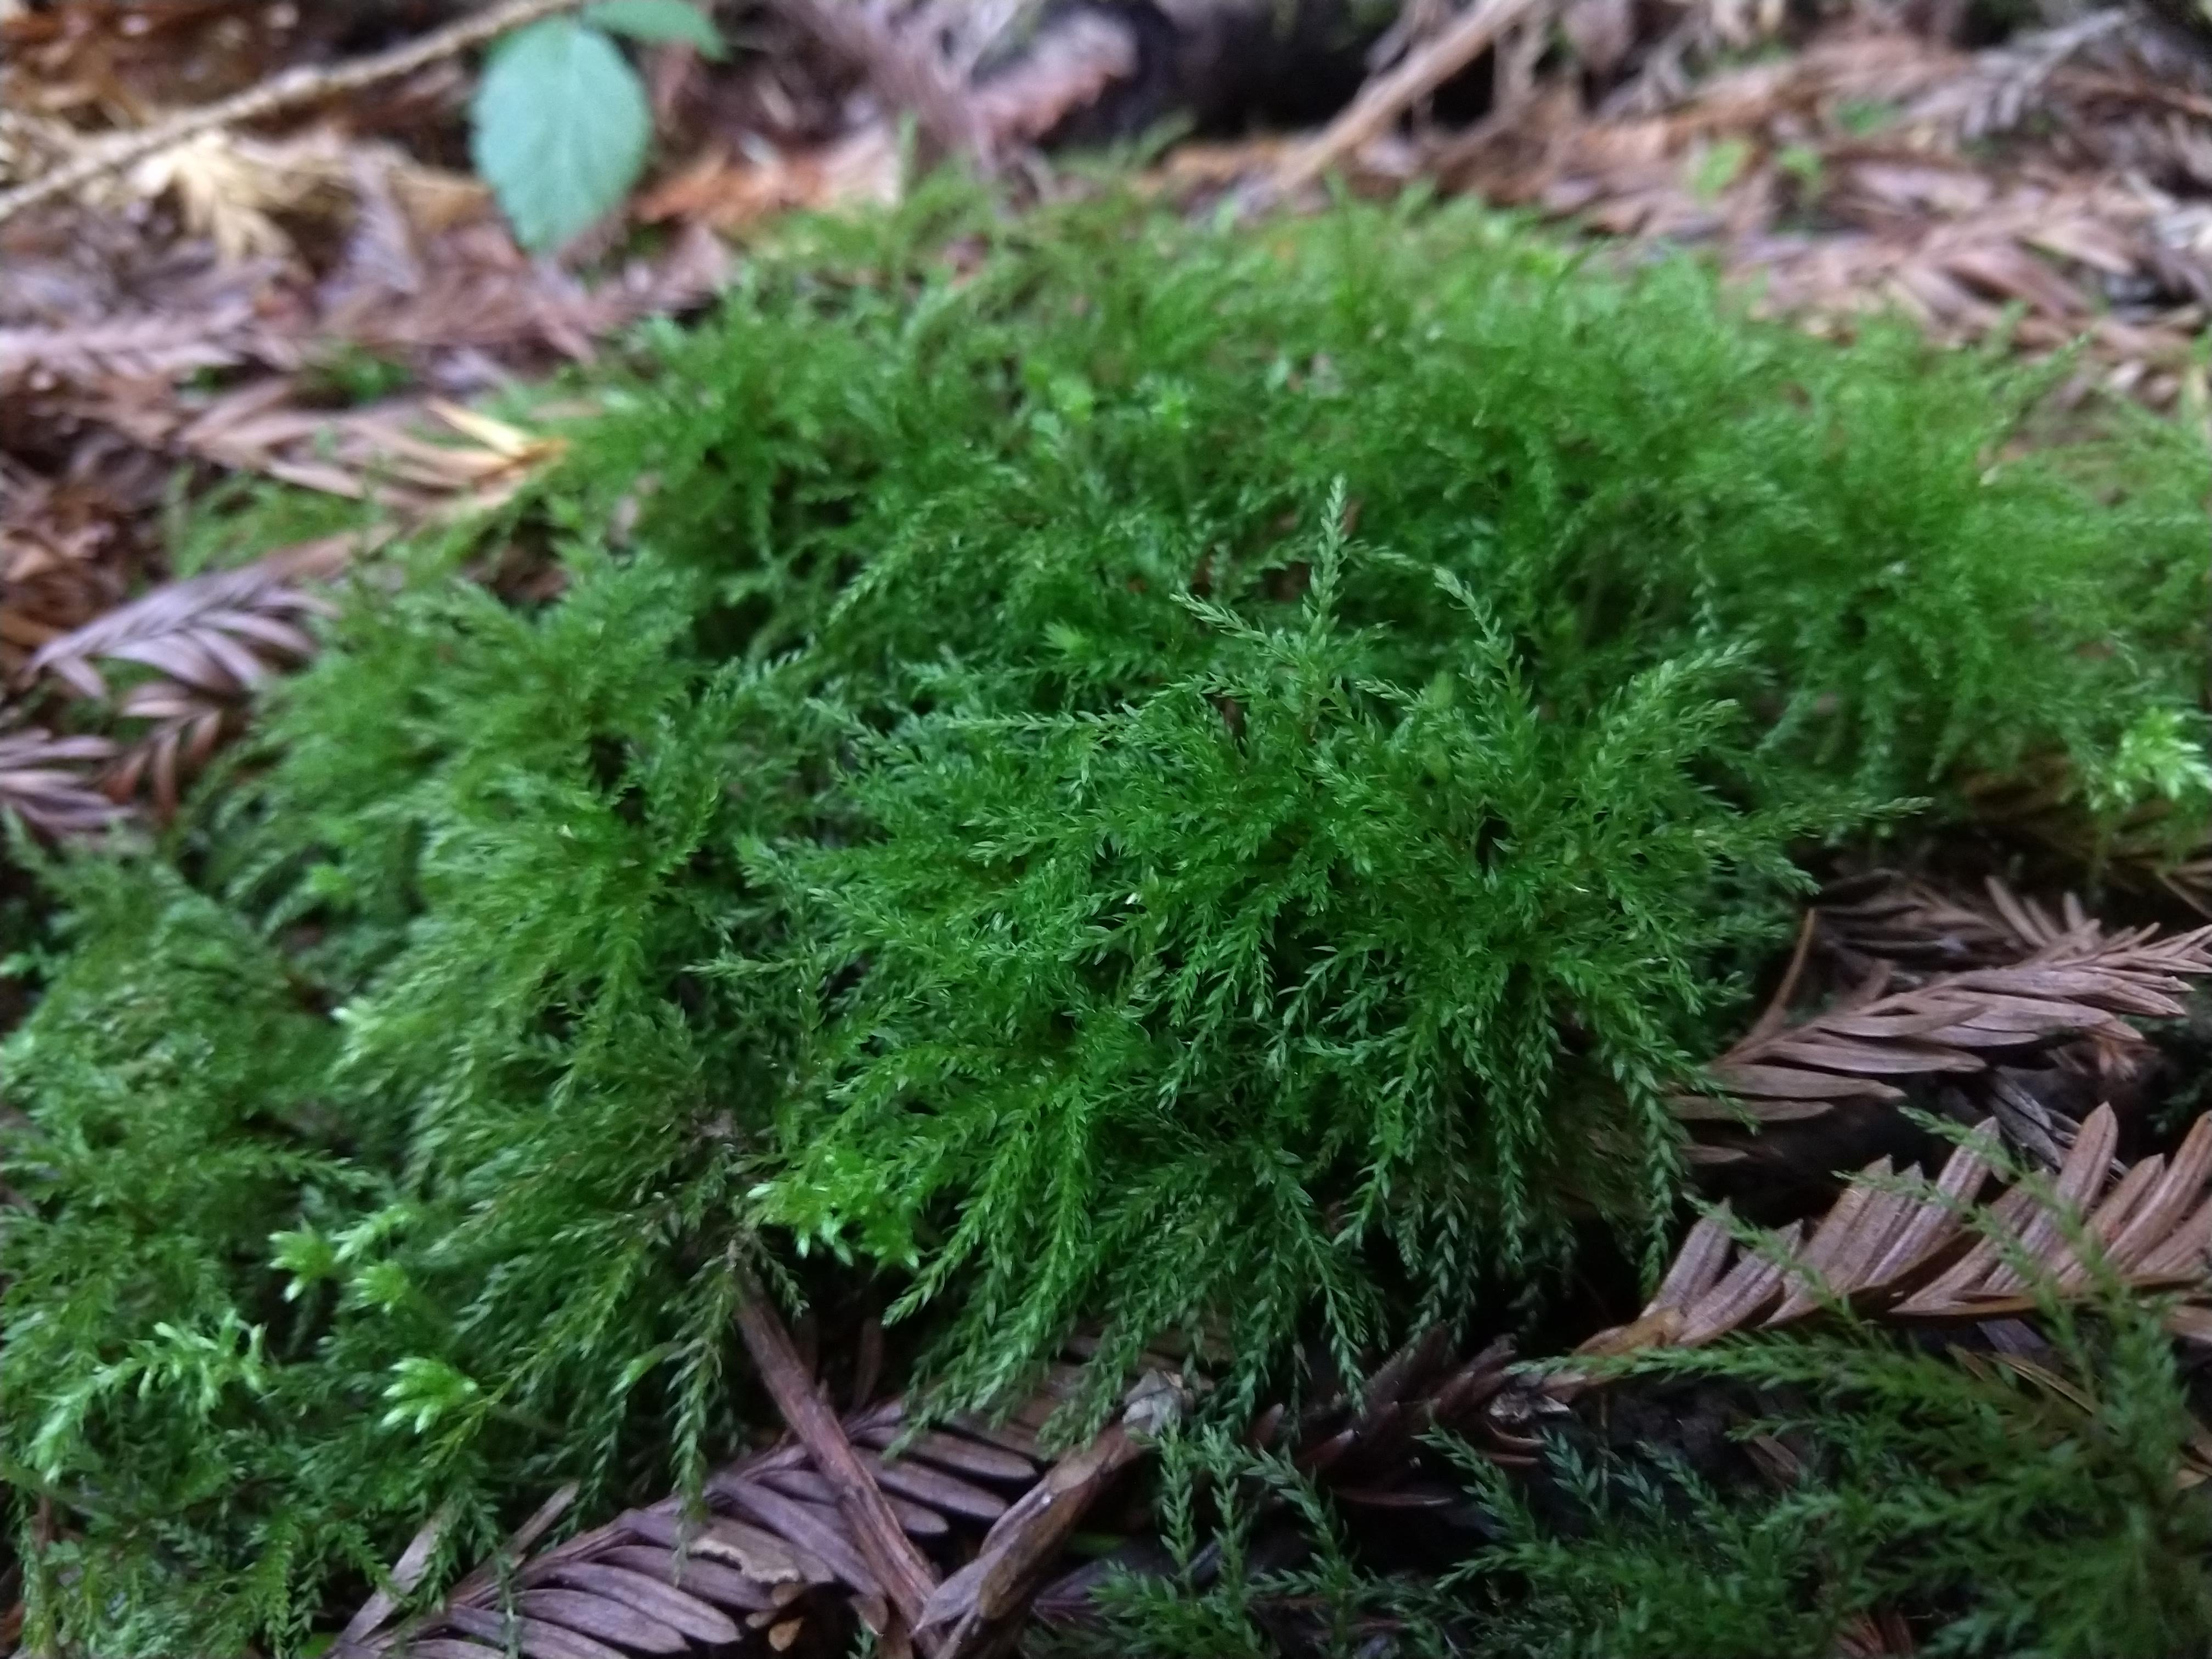 A clump of mosses